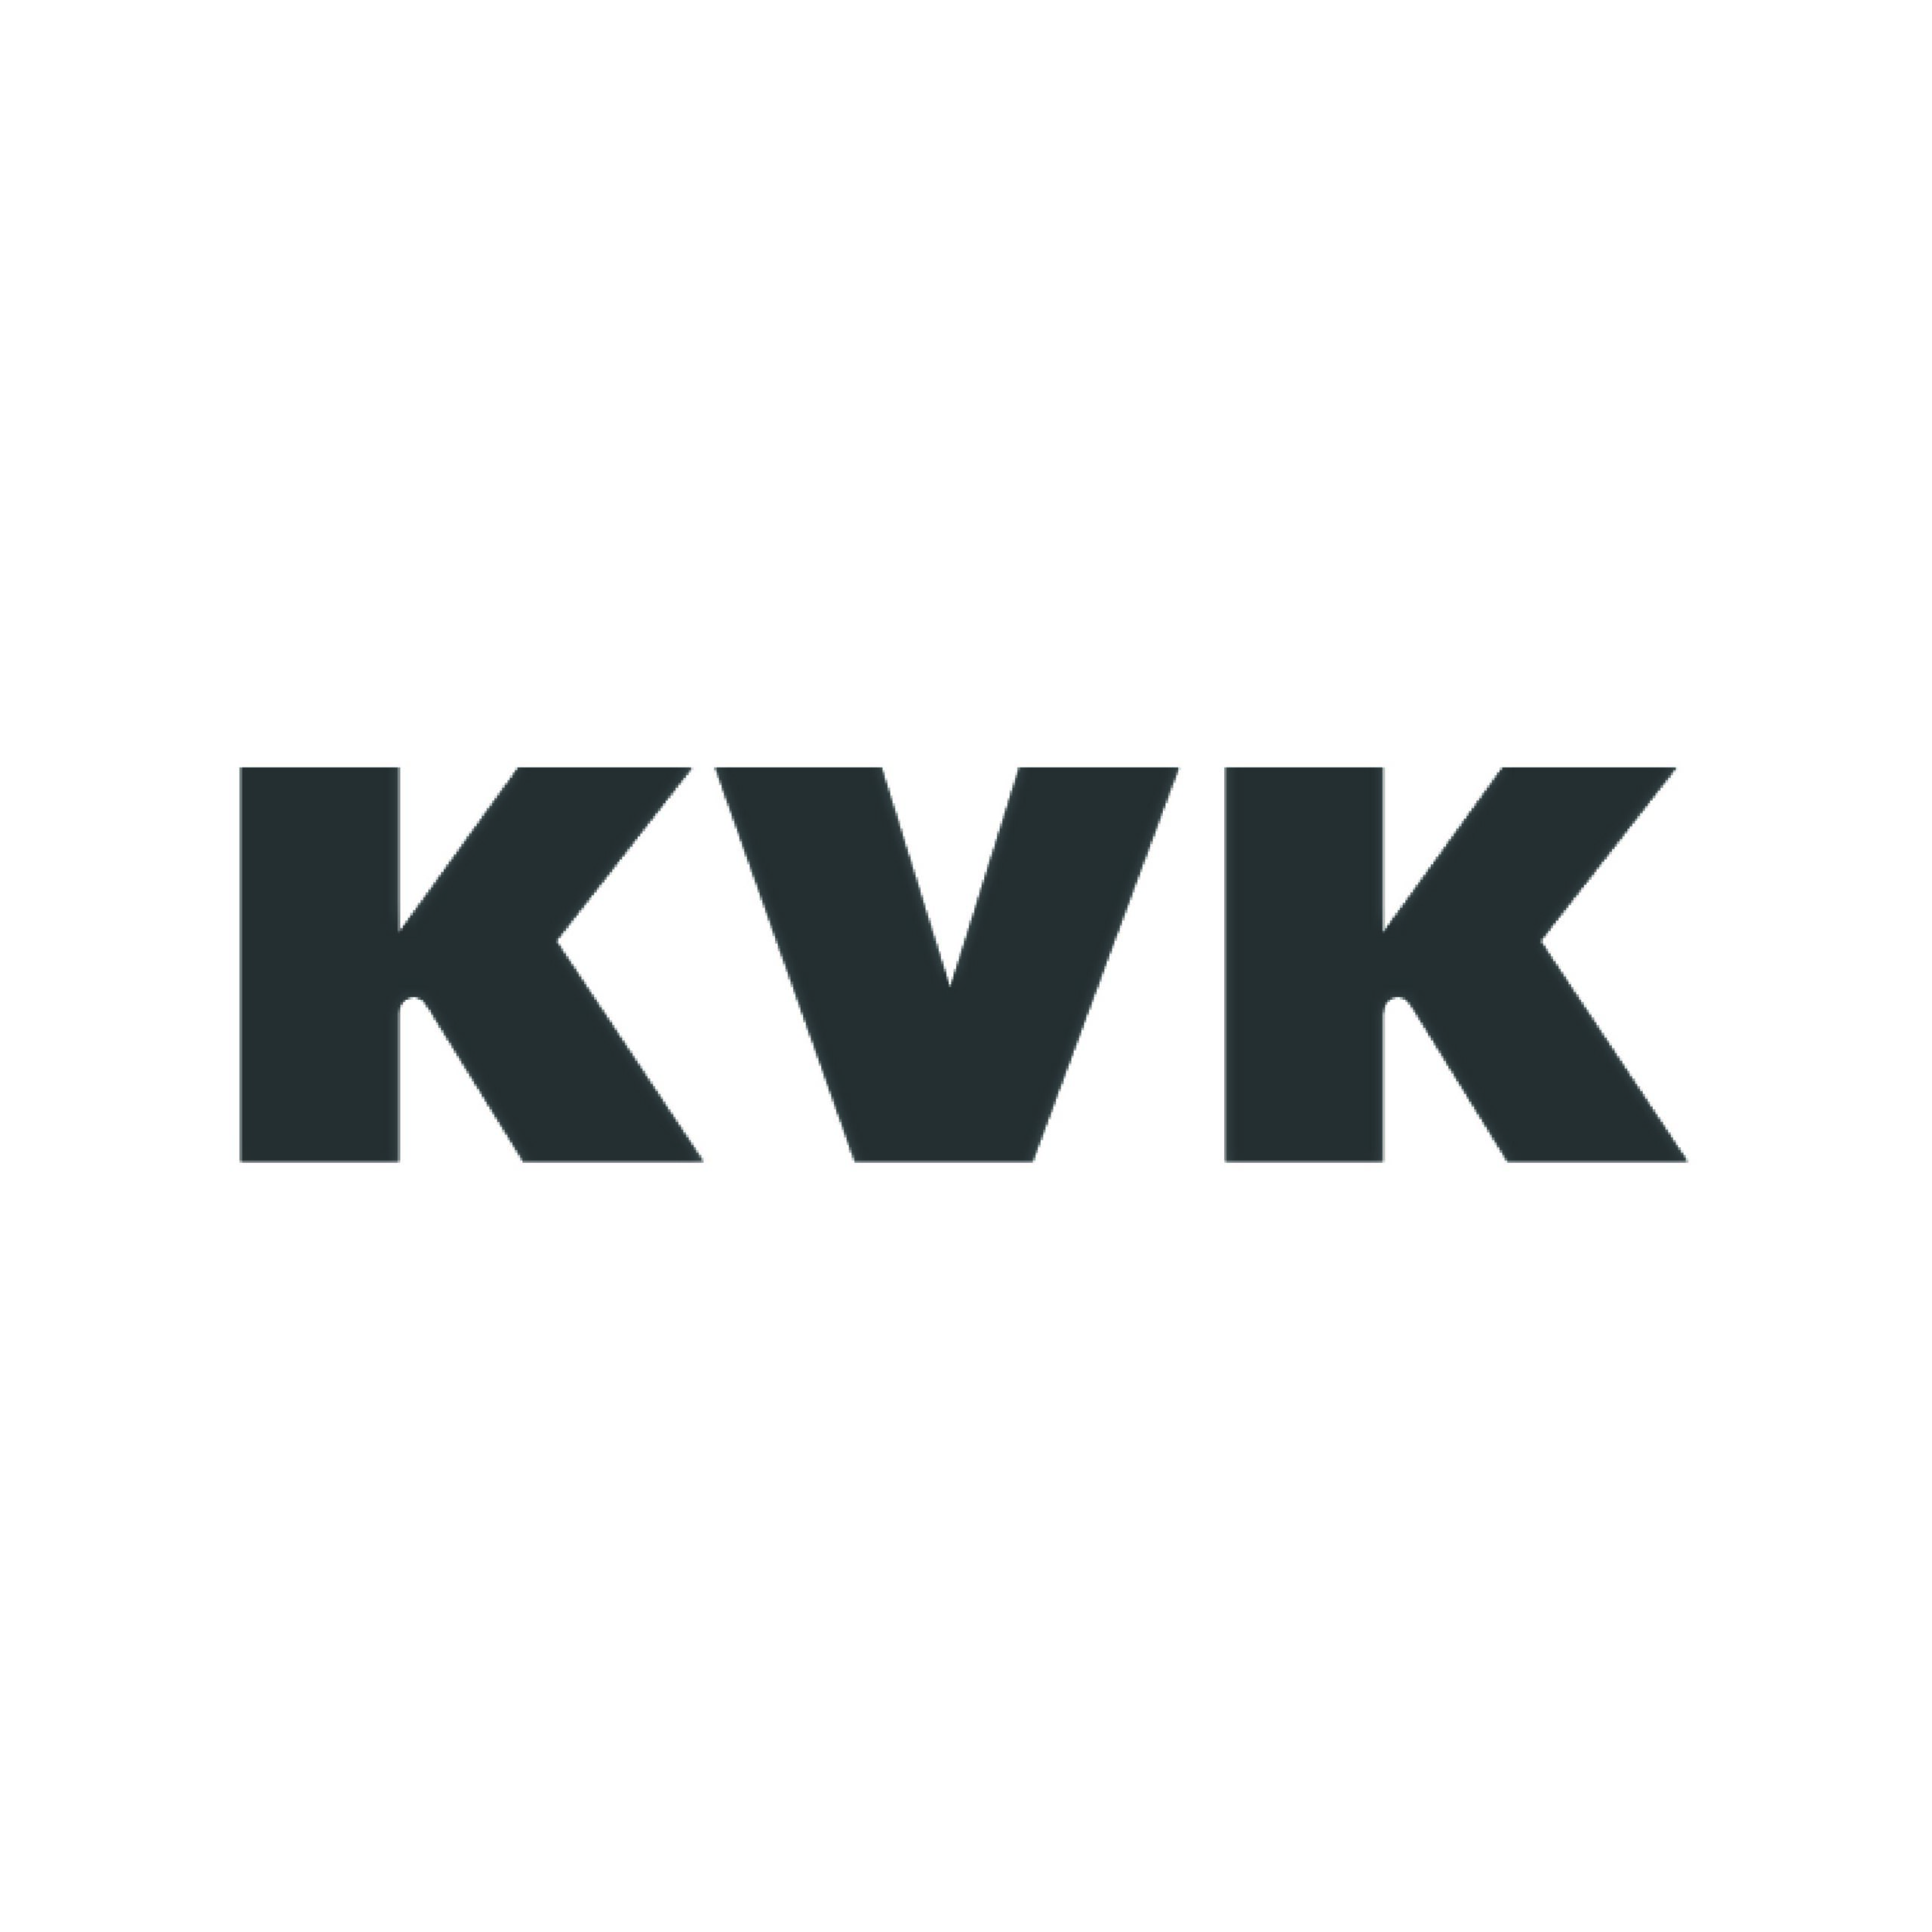 KvK-1024x1024-01